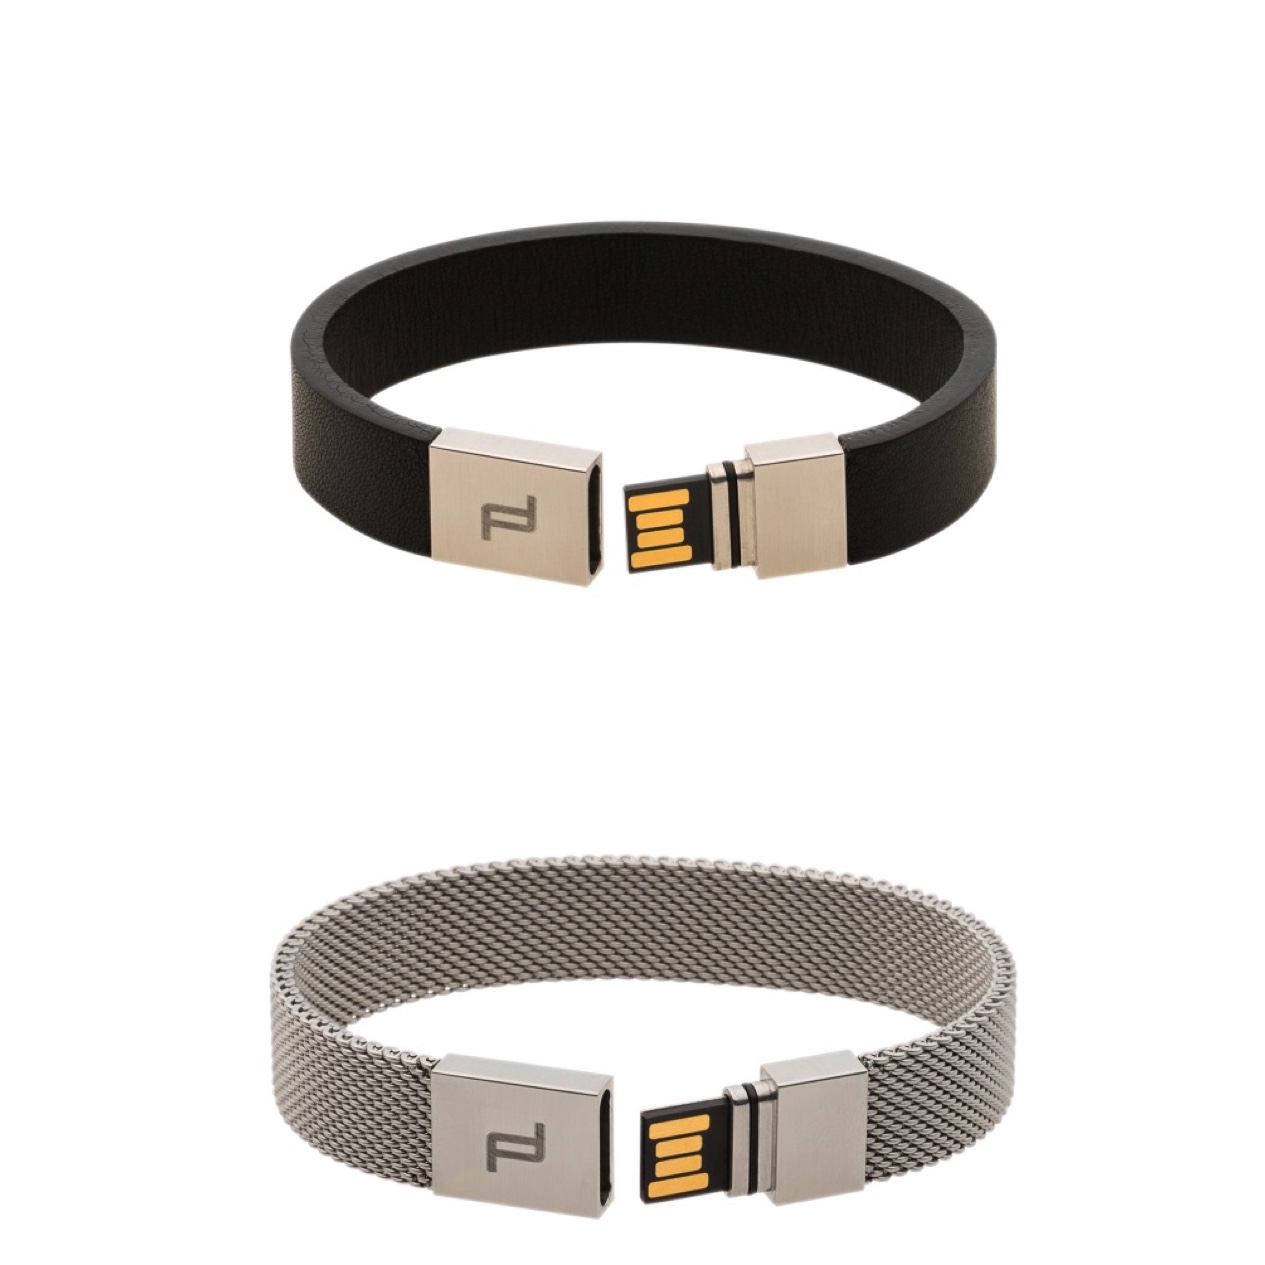 USB bracelets  Custom silicone bracelets  Woven  Embroidered Patches  Manufacturer  Jin Sheu